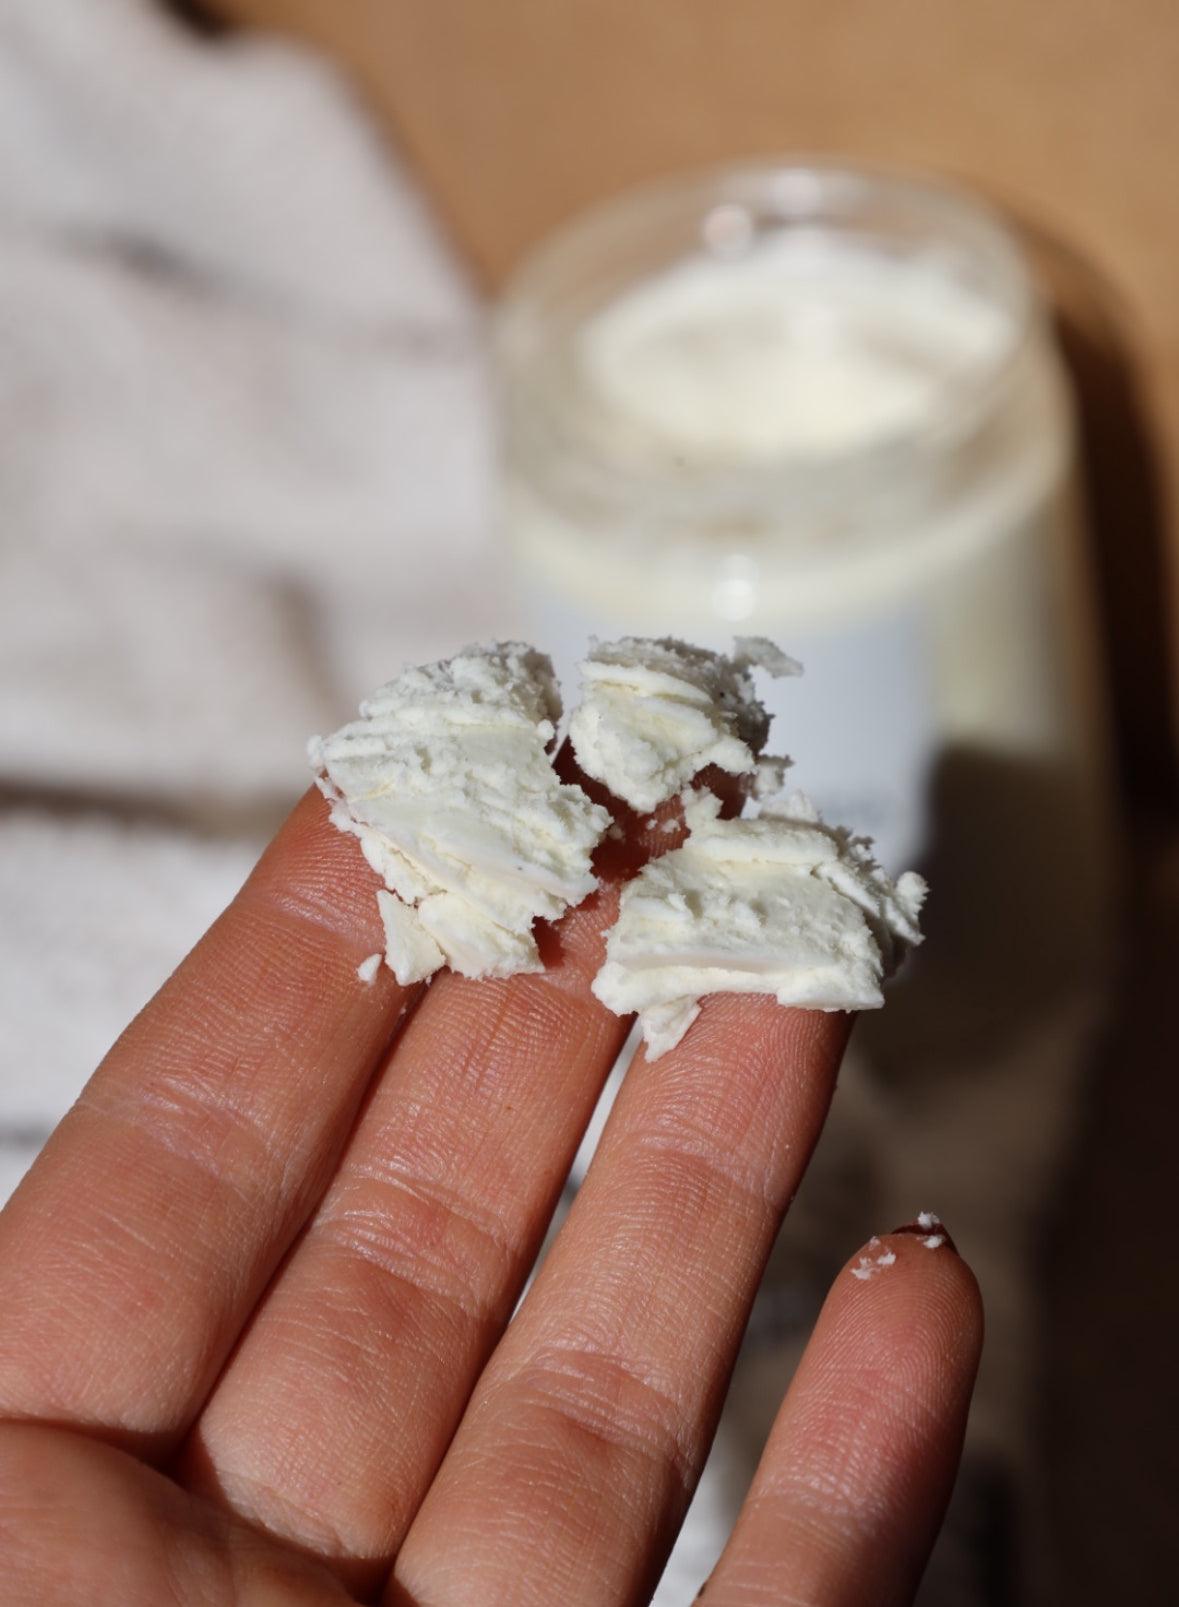 Vanilla Shea Non-toxic Whipped Body Butter